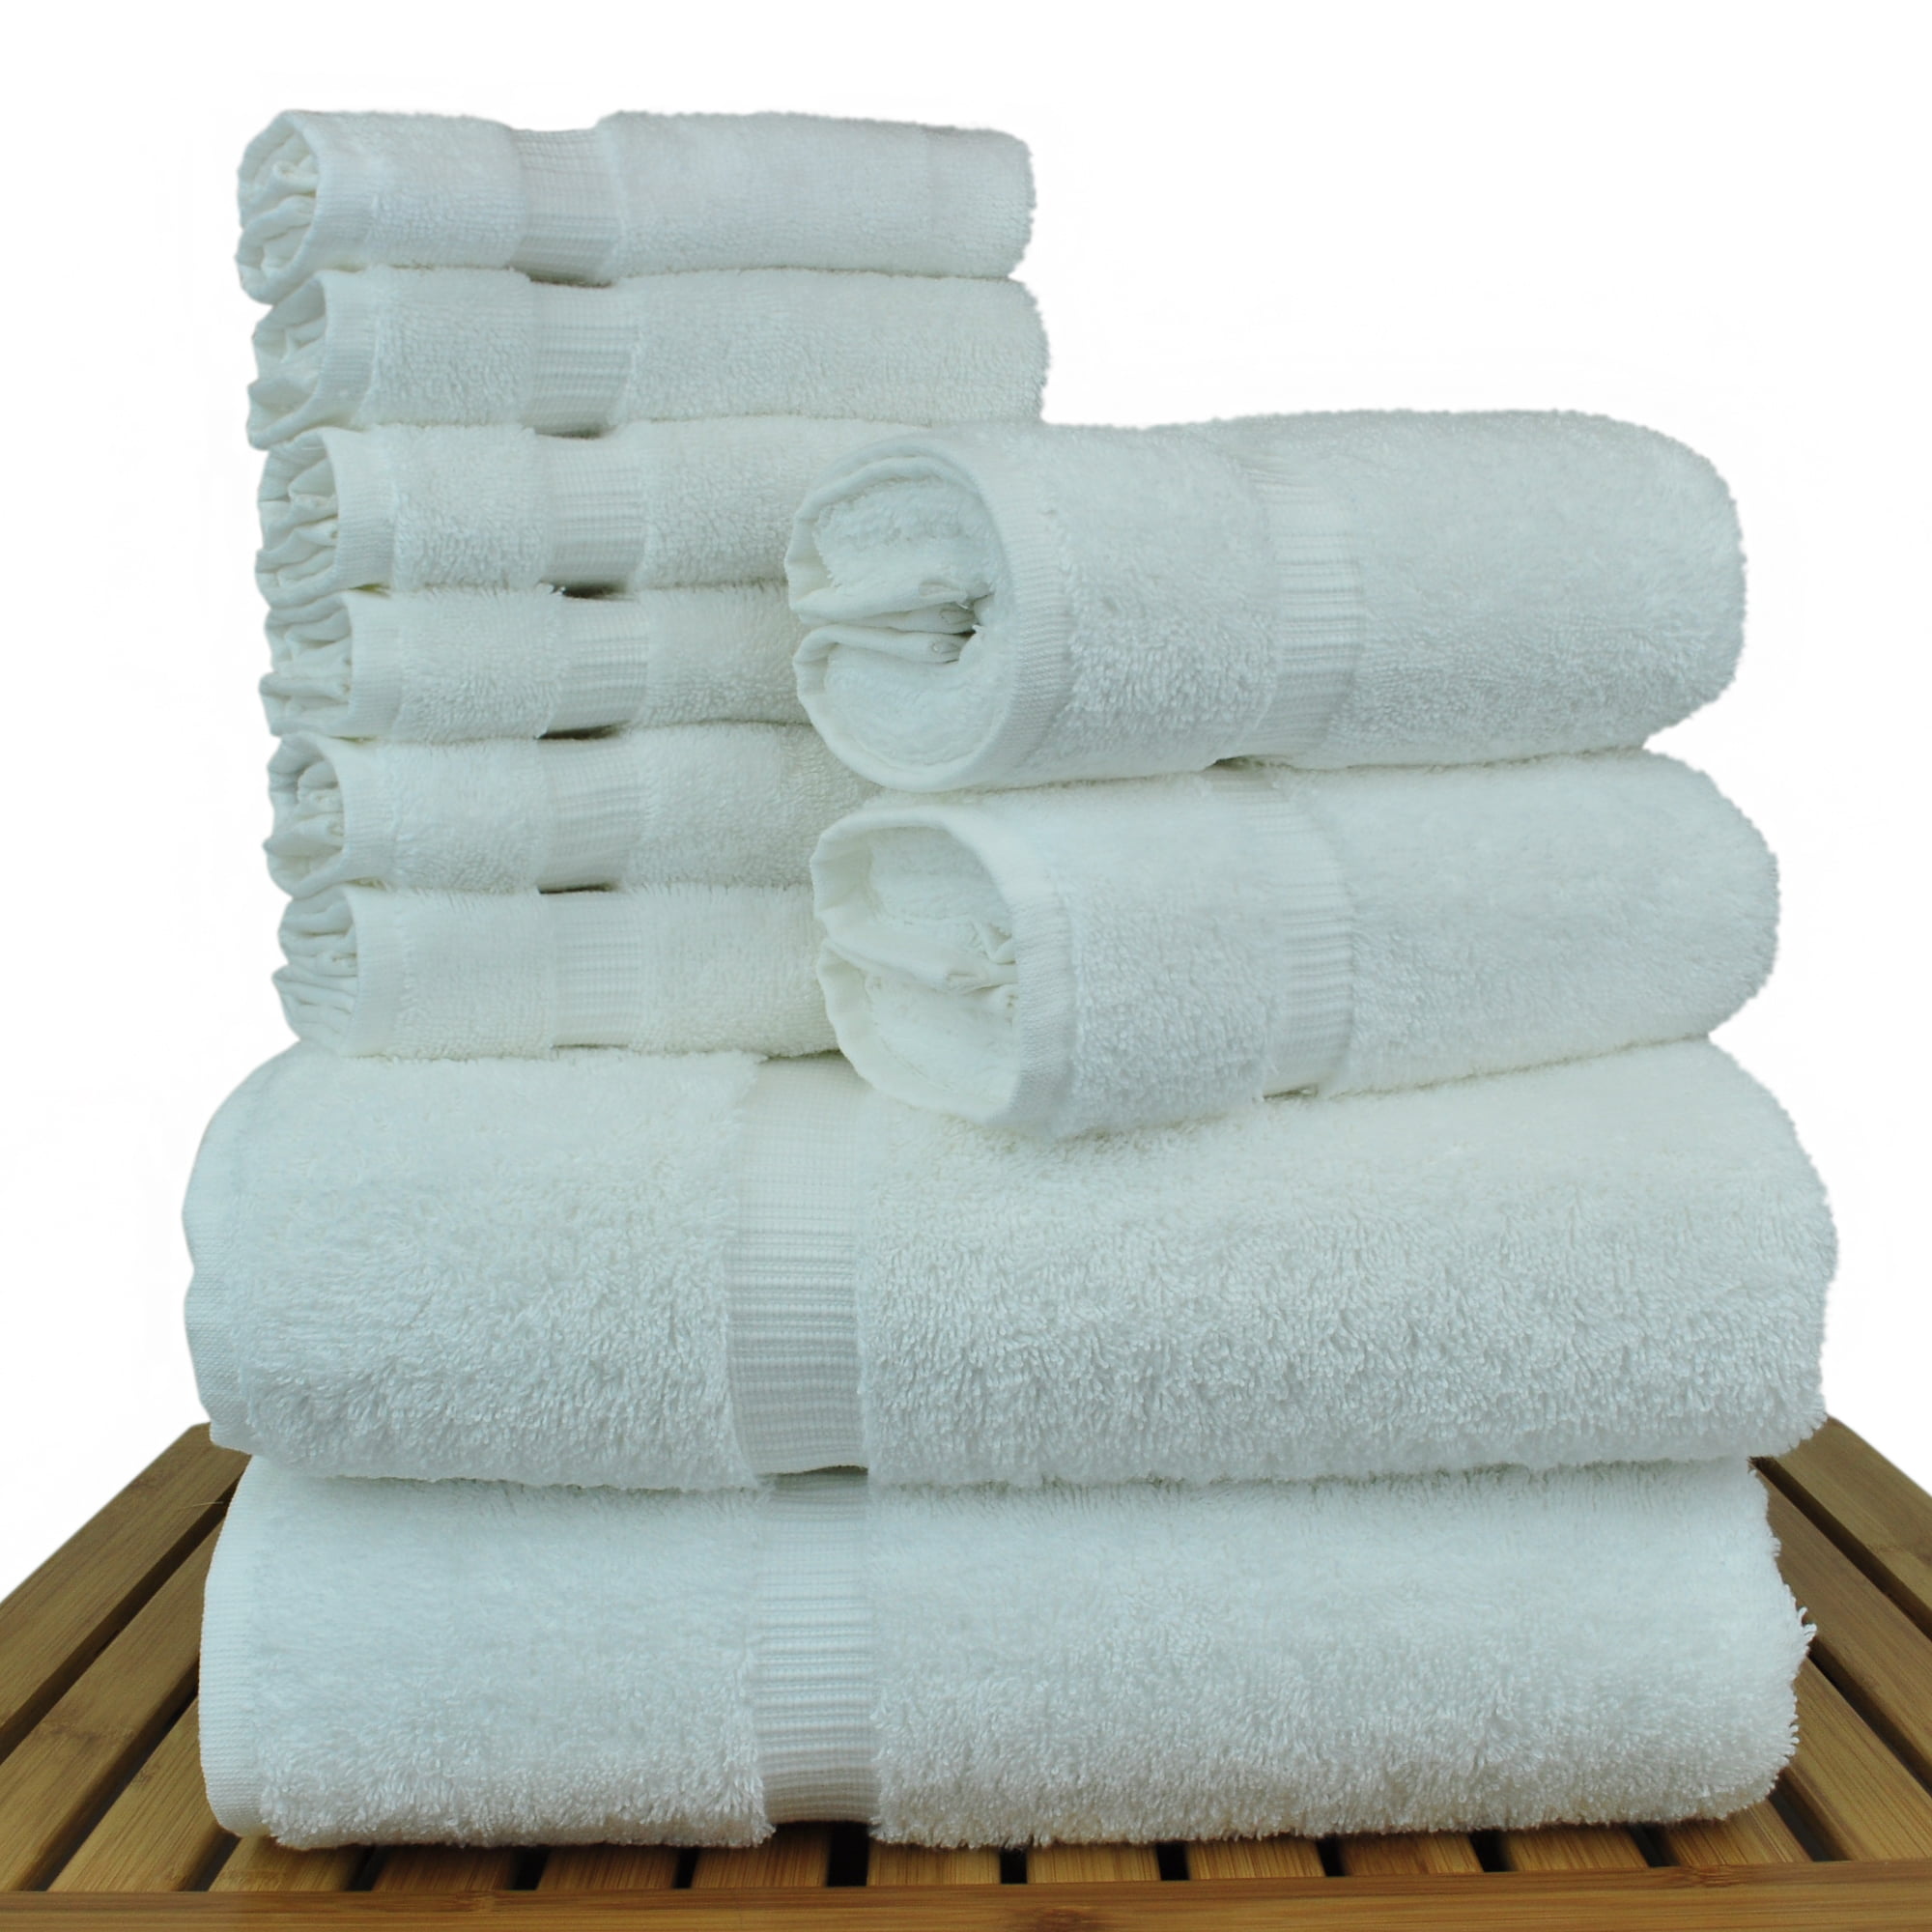 ESSELL Luxury 6-Piece Towel Set, 700 GSM 100% Cotton - 2 Bath Towels, 2 Hand Towels, 2 Washcloths, Zero Twists, Ultra Soft & Super Absorbent Meadow